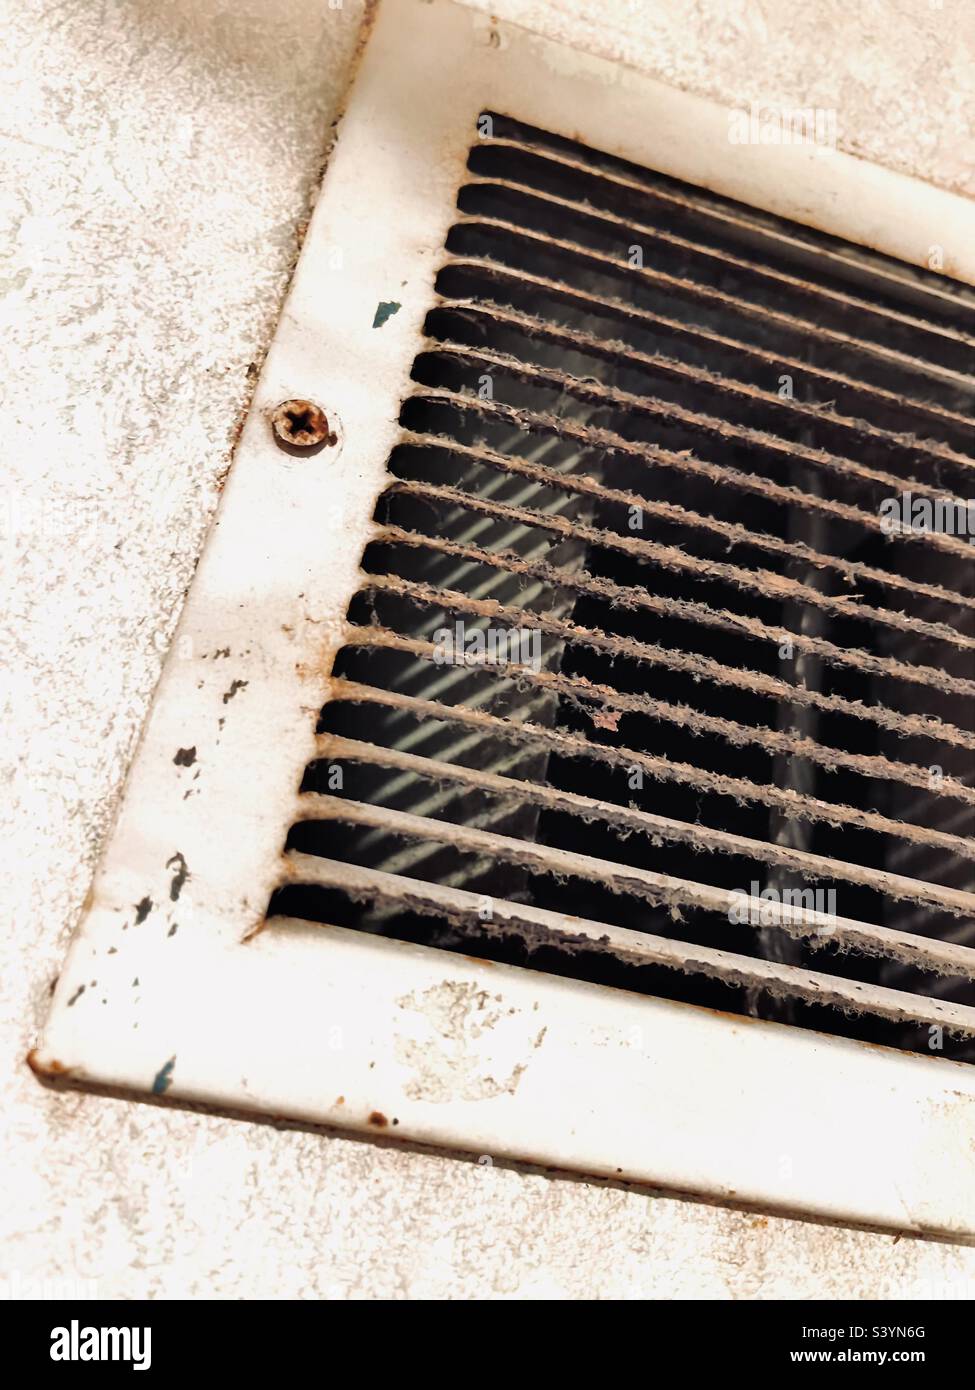 Dreckige Klimaanlage muss dringend gereinigt werden Stockfoto